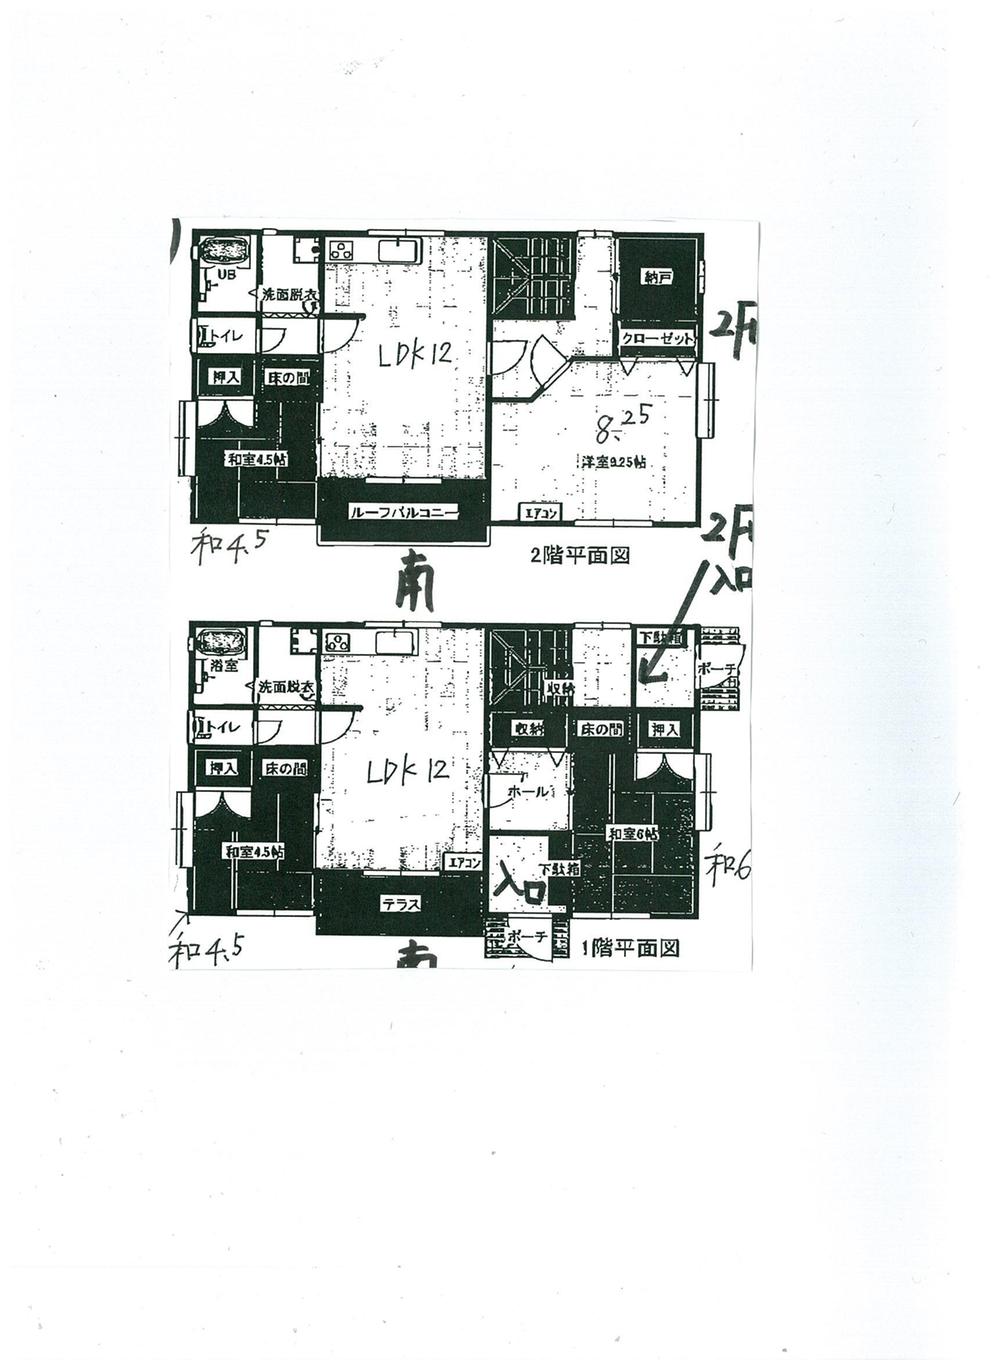 Floor plan. 14.8 million yen, 4LLDDKK + S (storeroom), Land area 294.01 sq m , Building area 132.48 sq m